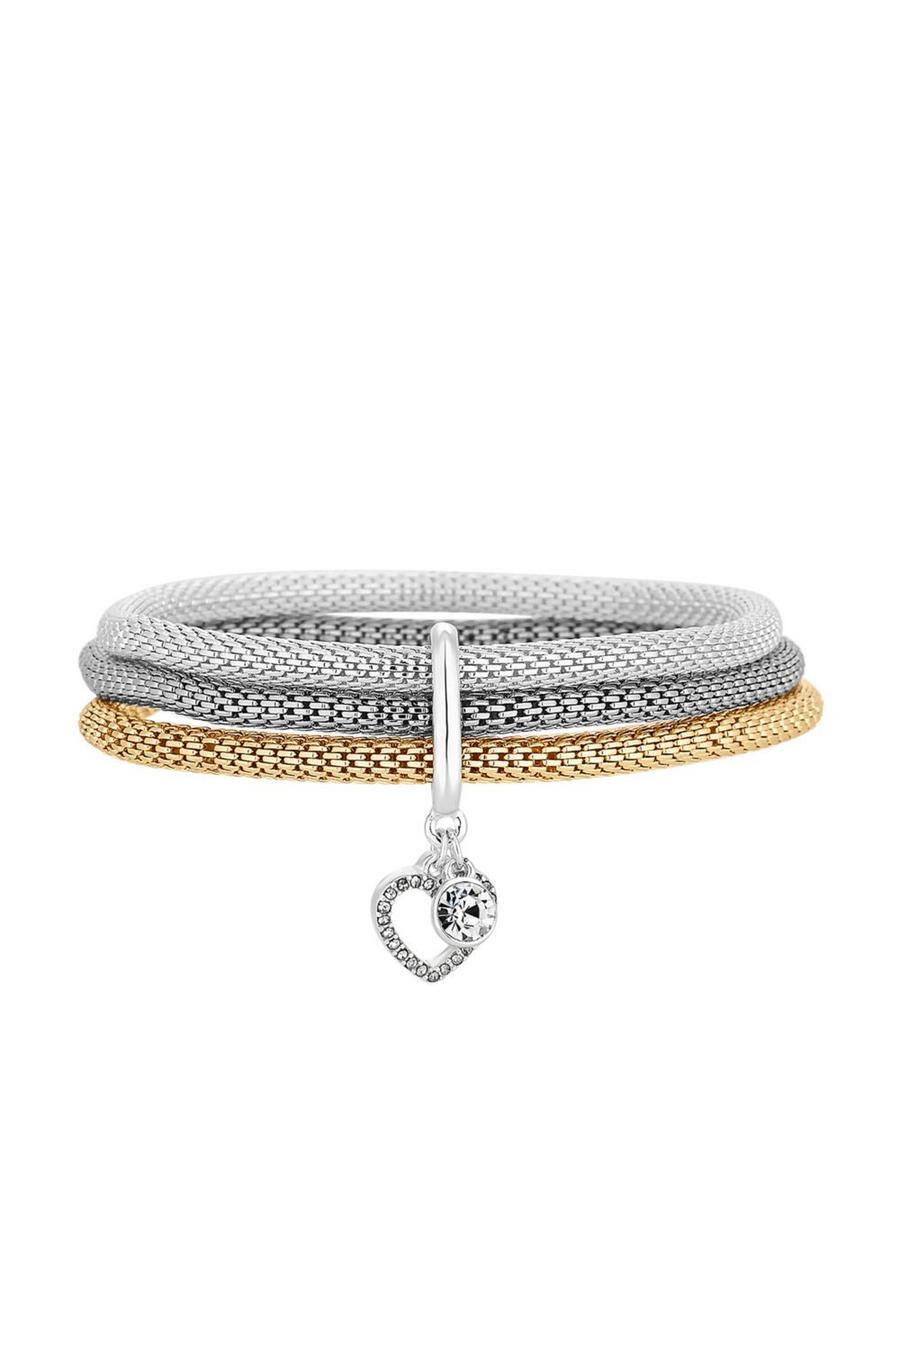 Silver and Rose Gold Mesh Stretch Bracelet Gift Set